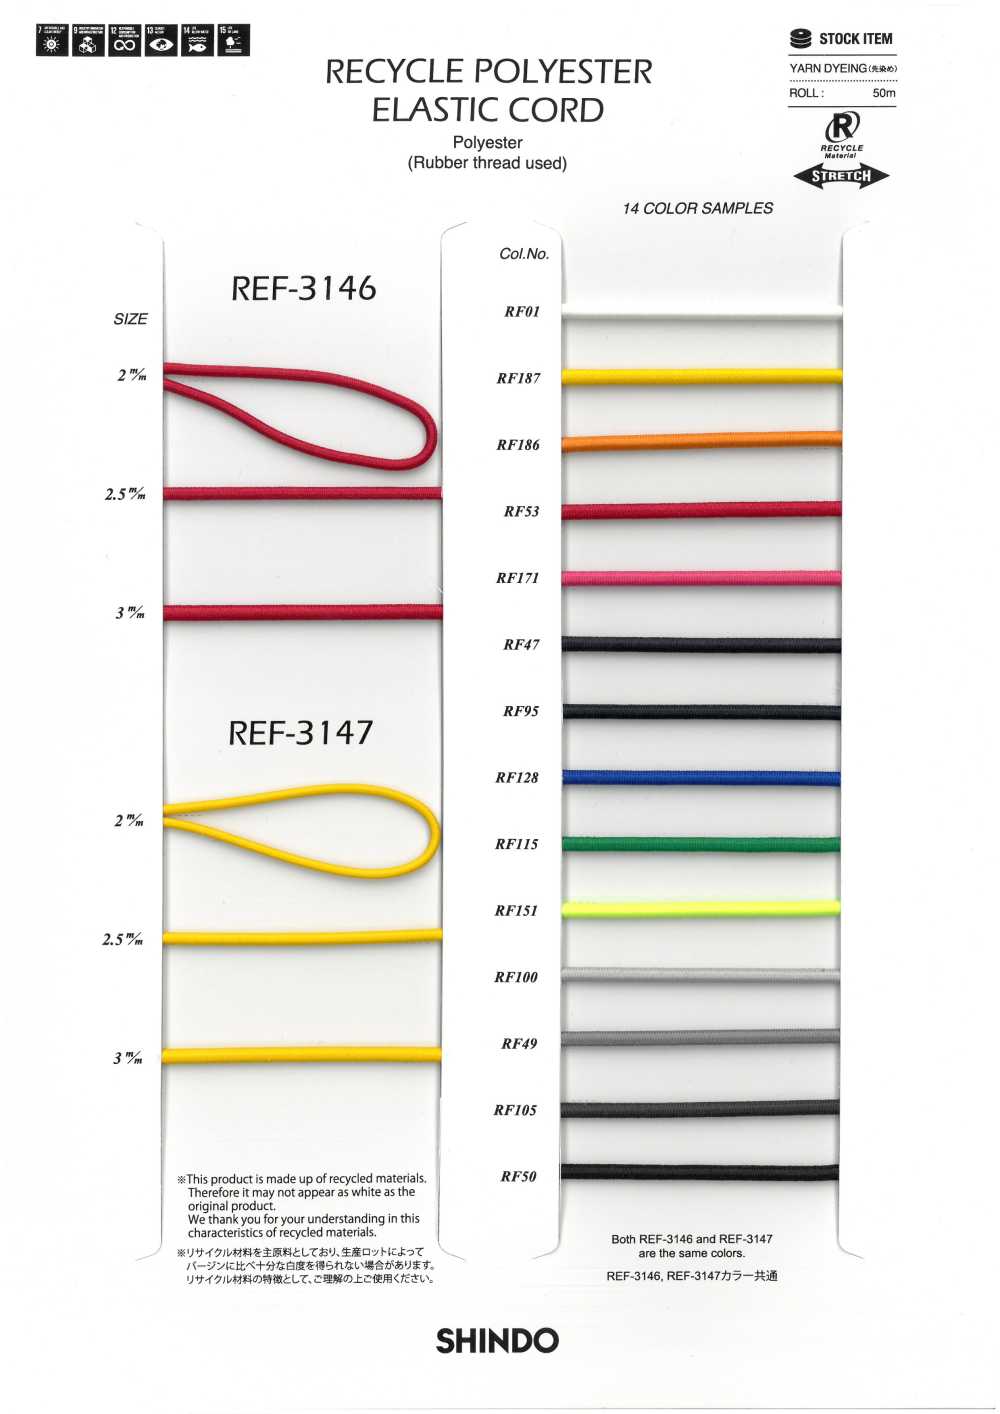 REF-3147 Recycled Polyester Elastic Cord (Hard Type)[Ribbon Tape Cord]  SHINDO(SIC)/Okura Shoji Co., Ltd. - ApparelX